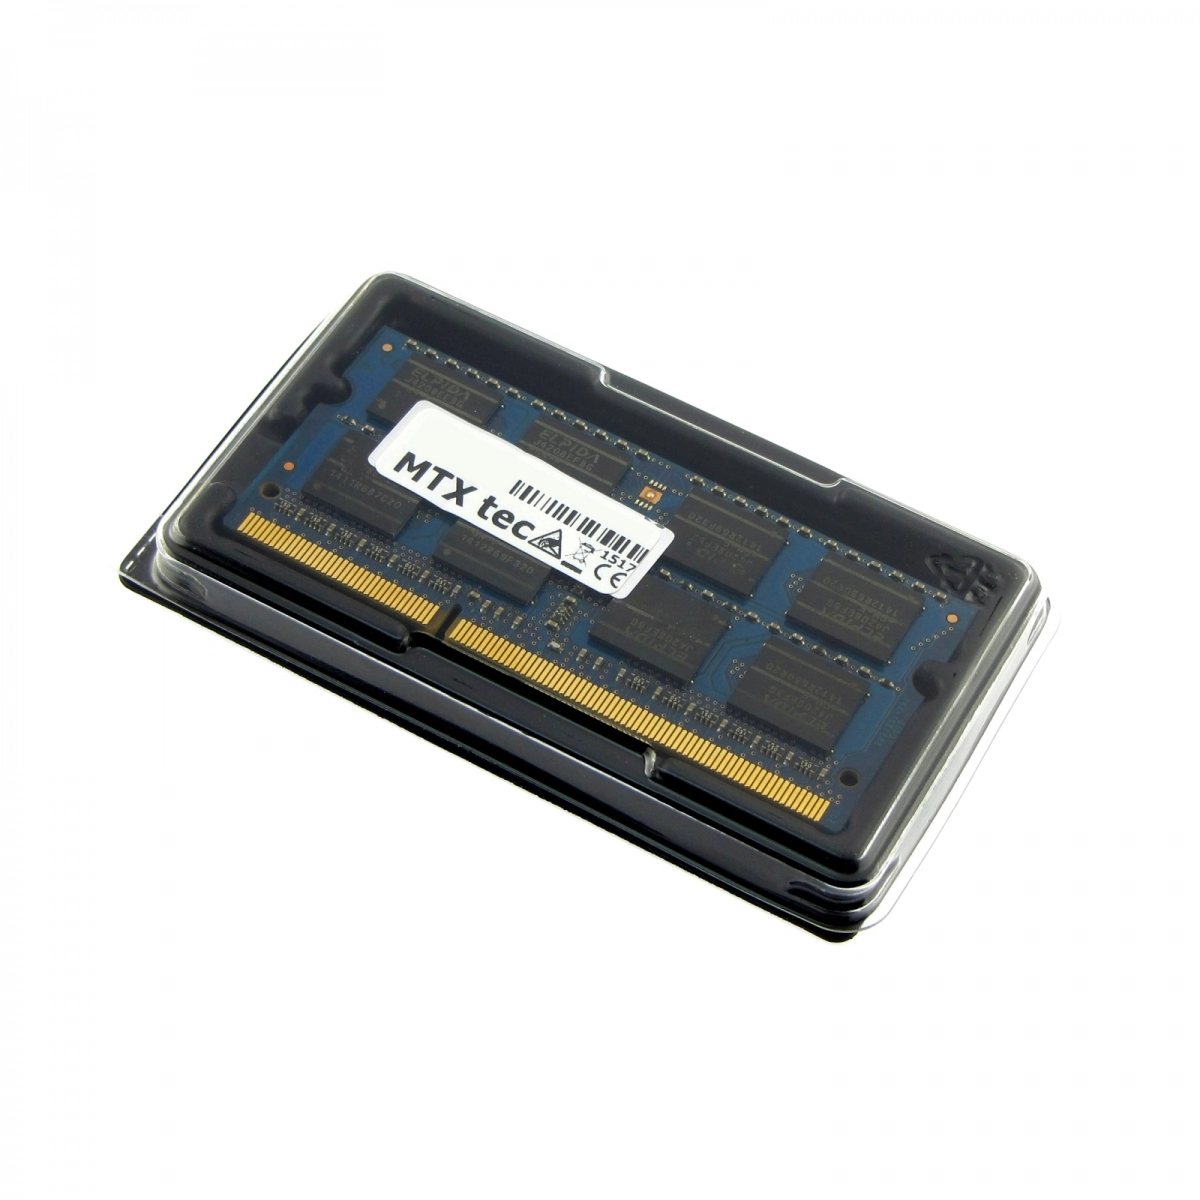 MTXtec Arbeitsspeicher 4 GB RAM für LENOVO ThinkPad Edge E530